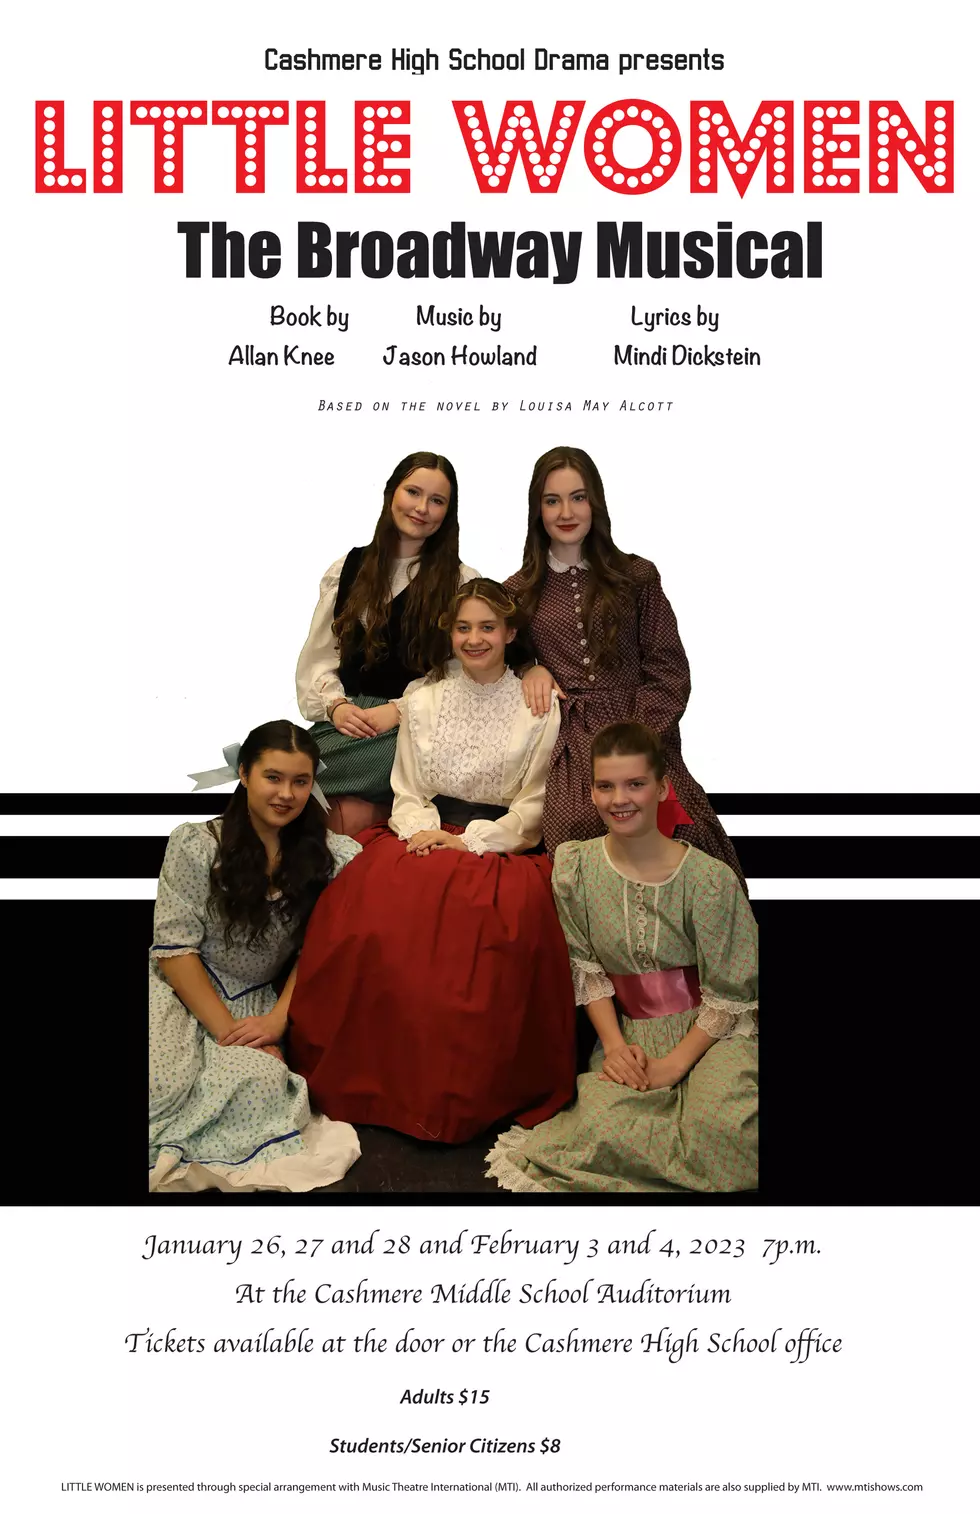 Cashmere High School Presents “Little Women: The Broadway Musical”